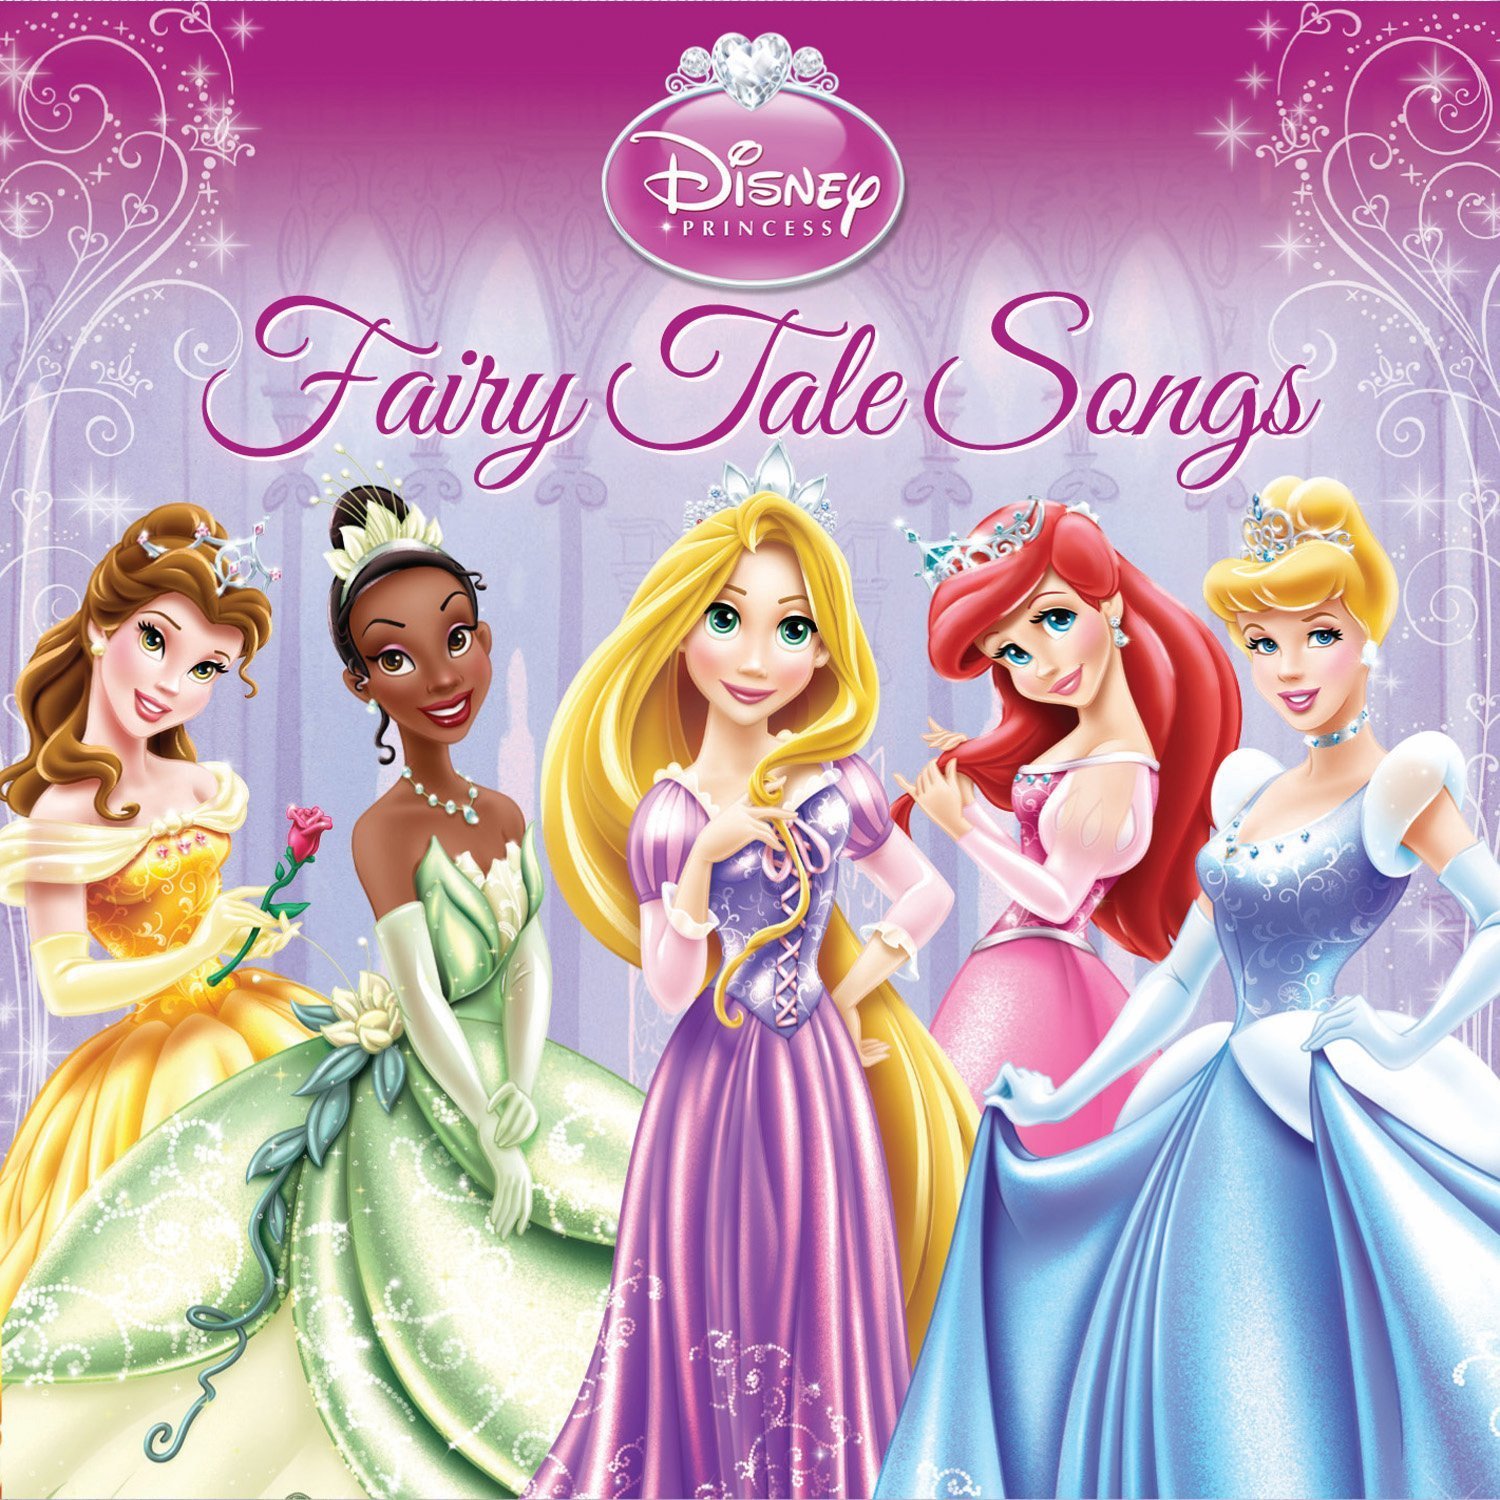 Disney - Disney Princess: Fairy Tale Songs - Amazon.com Music